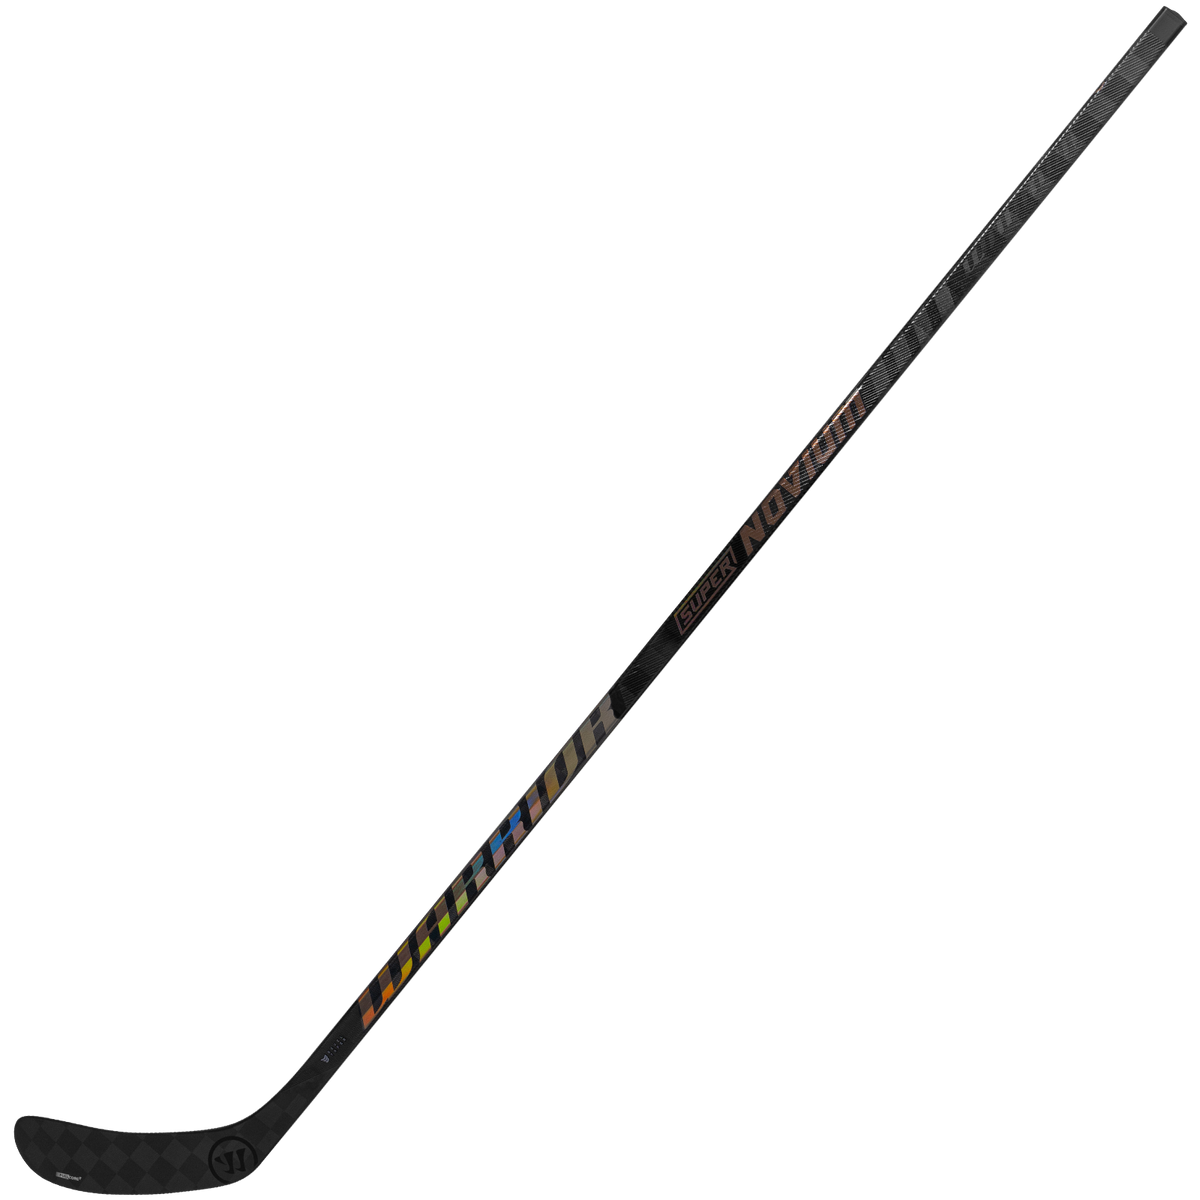 Warrior Super Novium Senior Hockey Stick